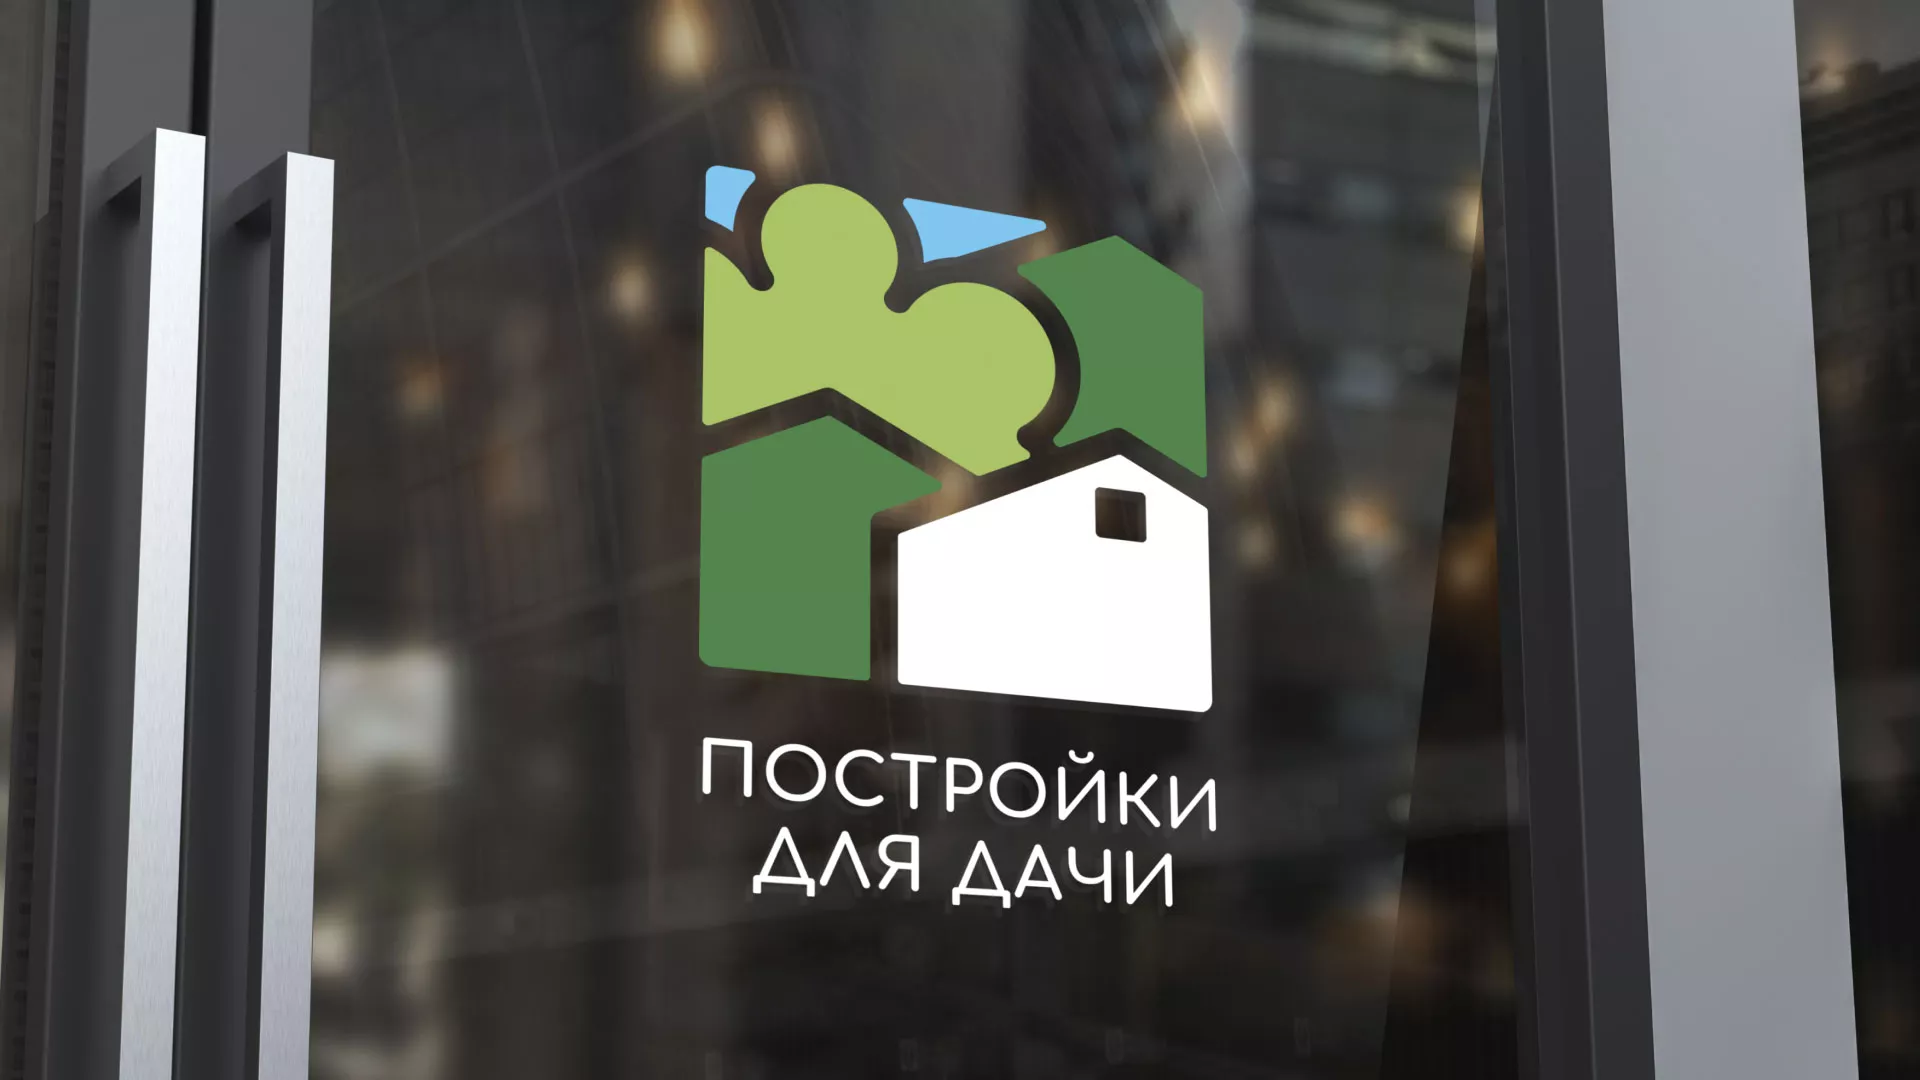 Разработка логотипа в Пересвете для компании «Постройки для дачи»